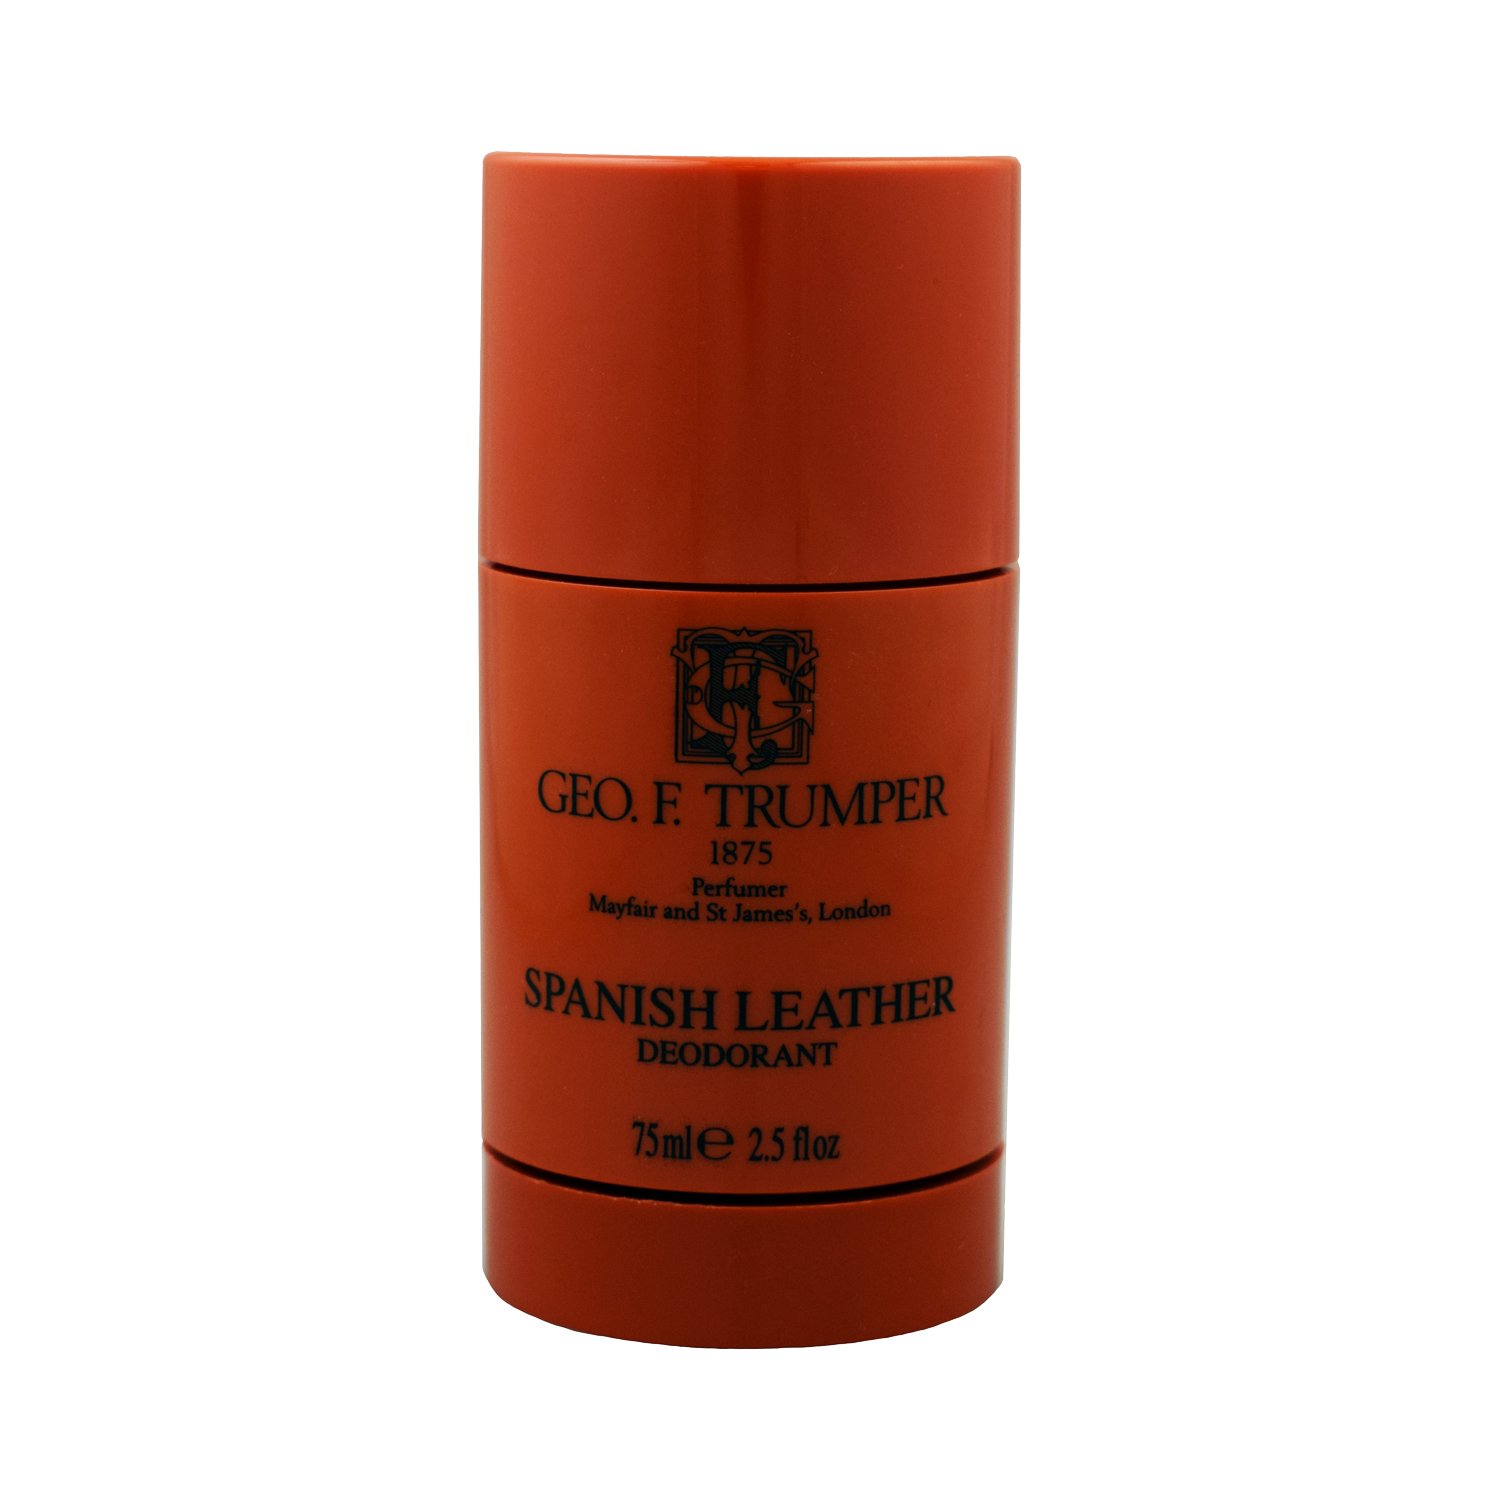 Geo. F. Trumper - Spanish Leather - Deodorant Stick